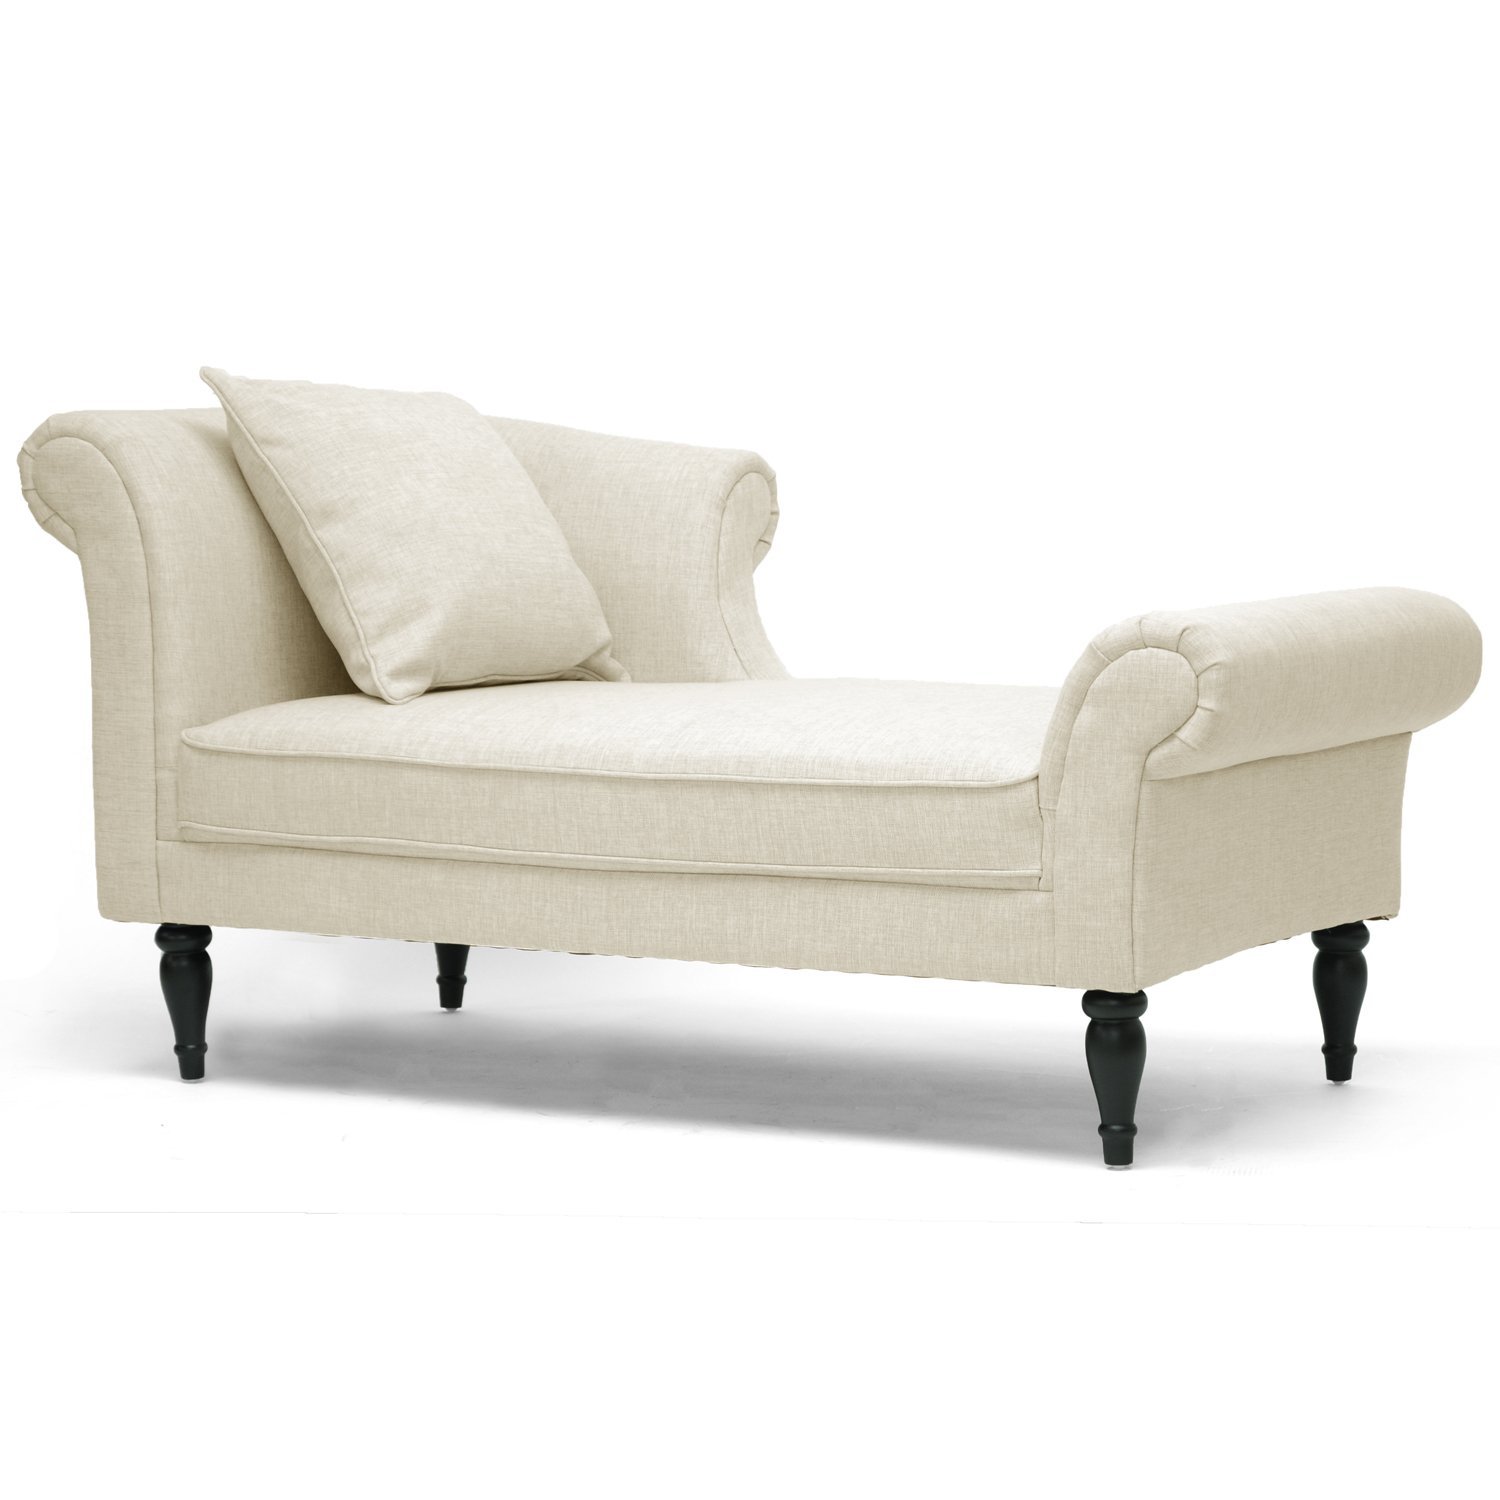 Chaise longue sofa bed wdmehfc DHEIKXF